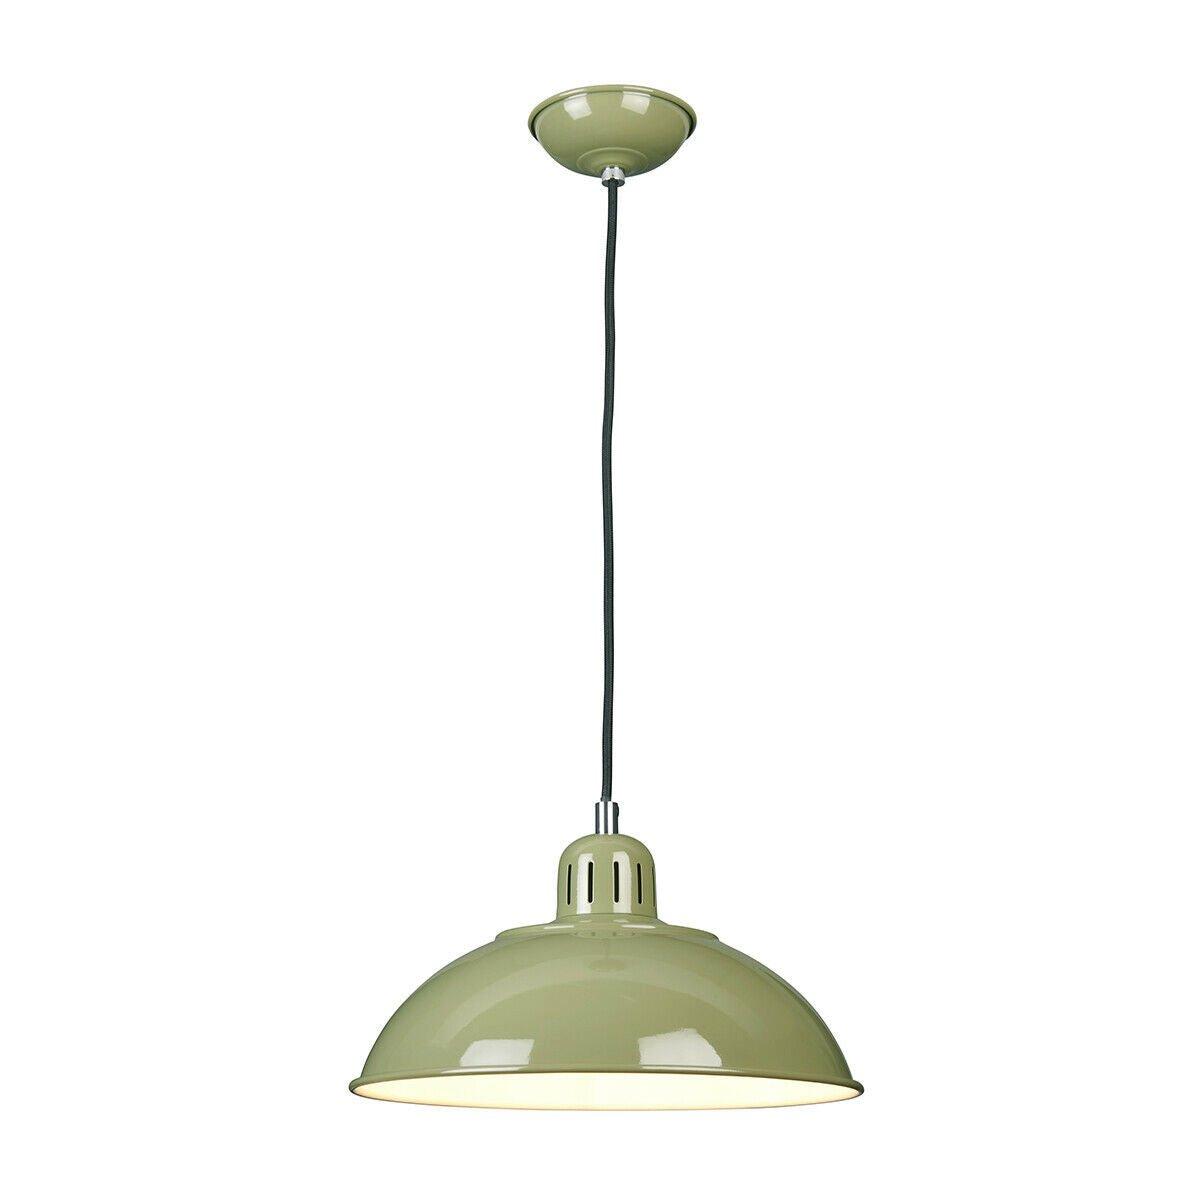 1 Bulb Ceiling Pendant Light Fitting Green LED E27 60W Bulb